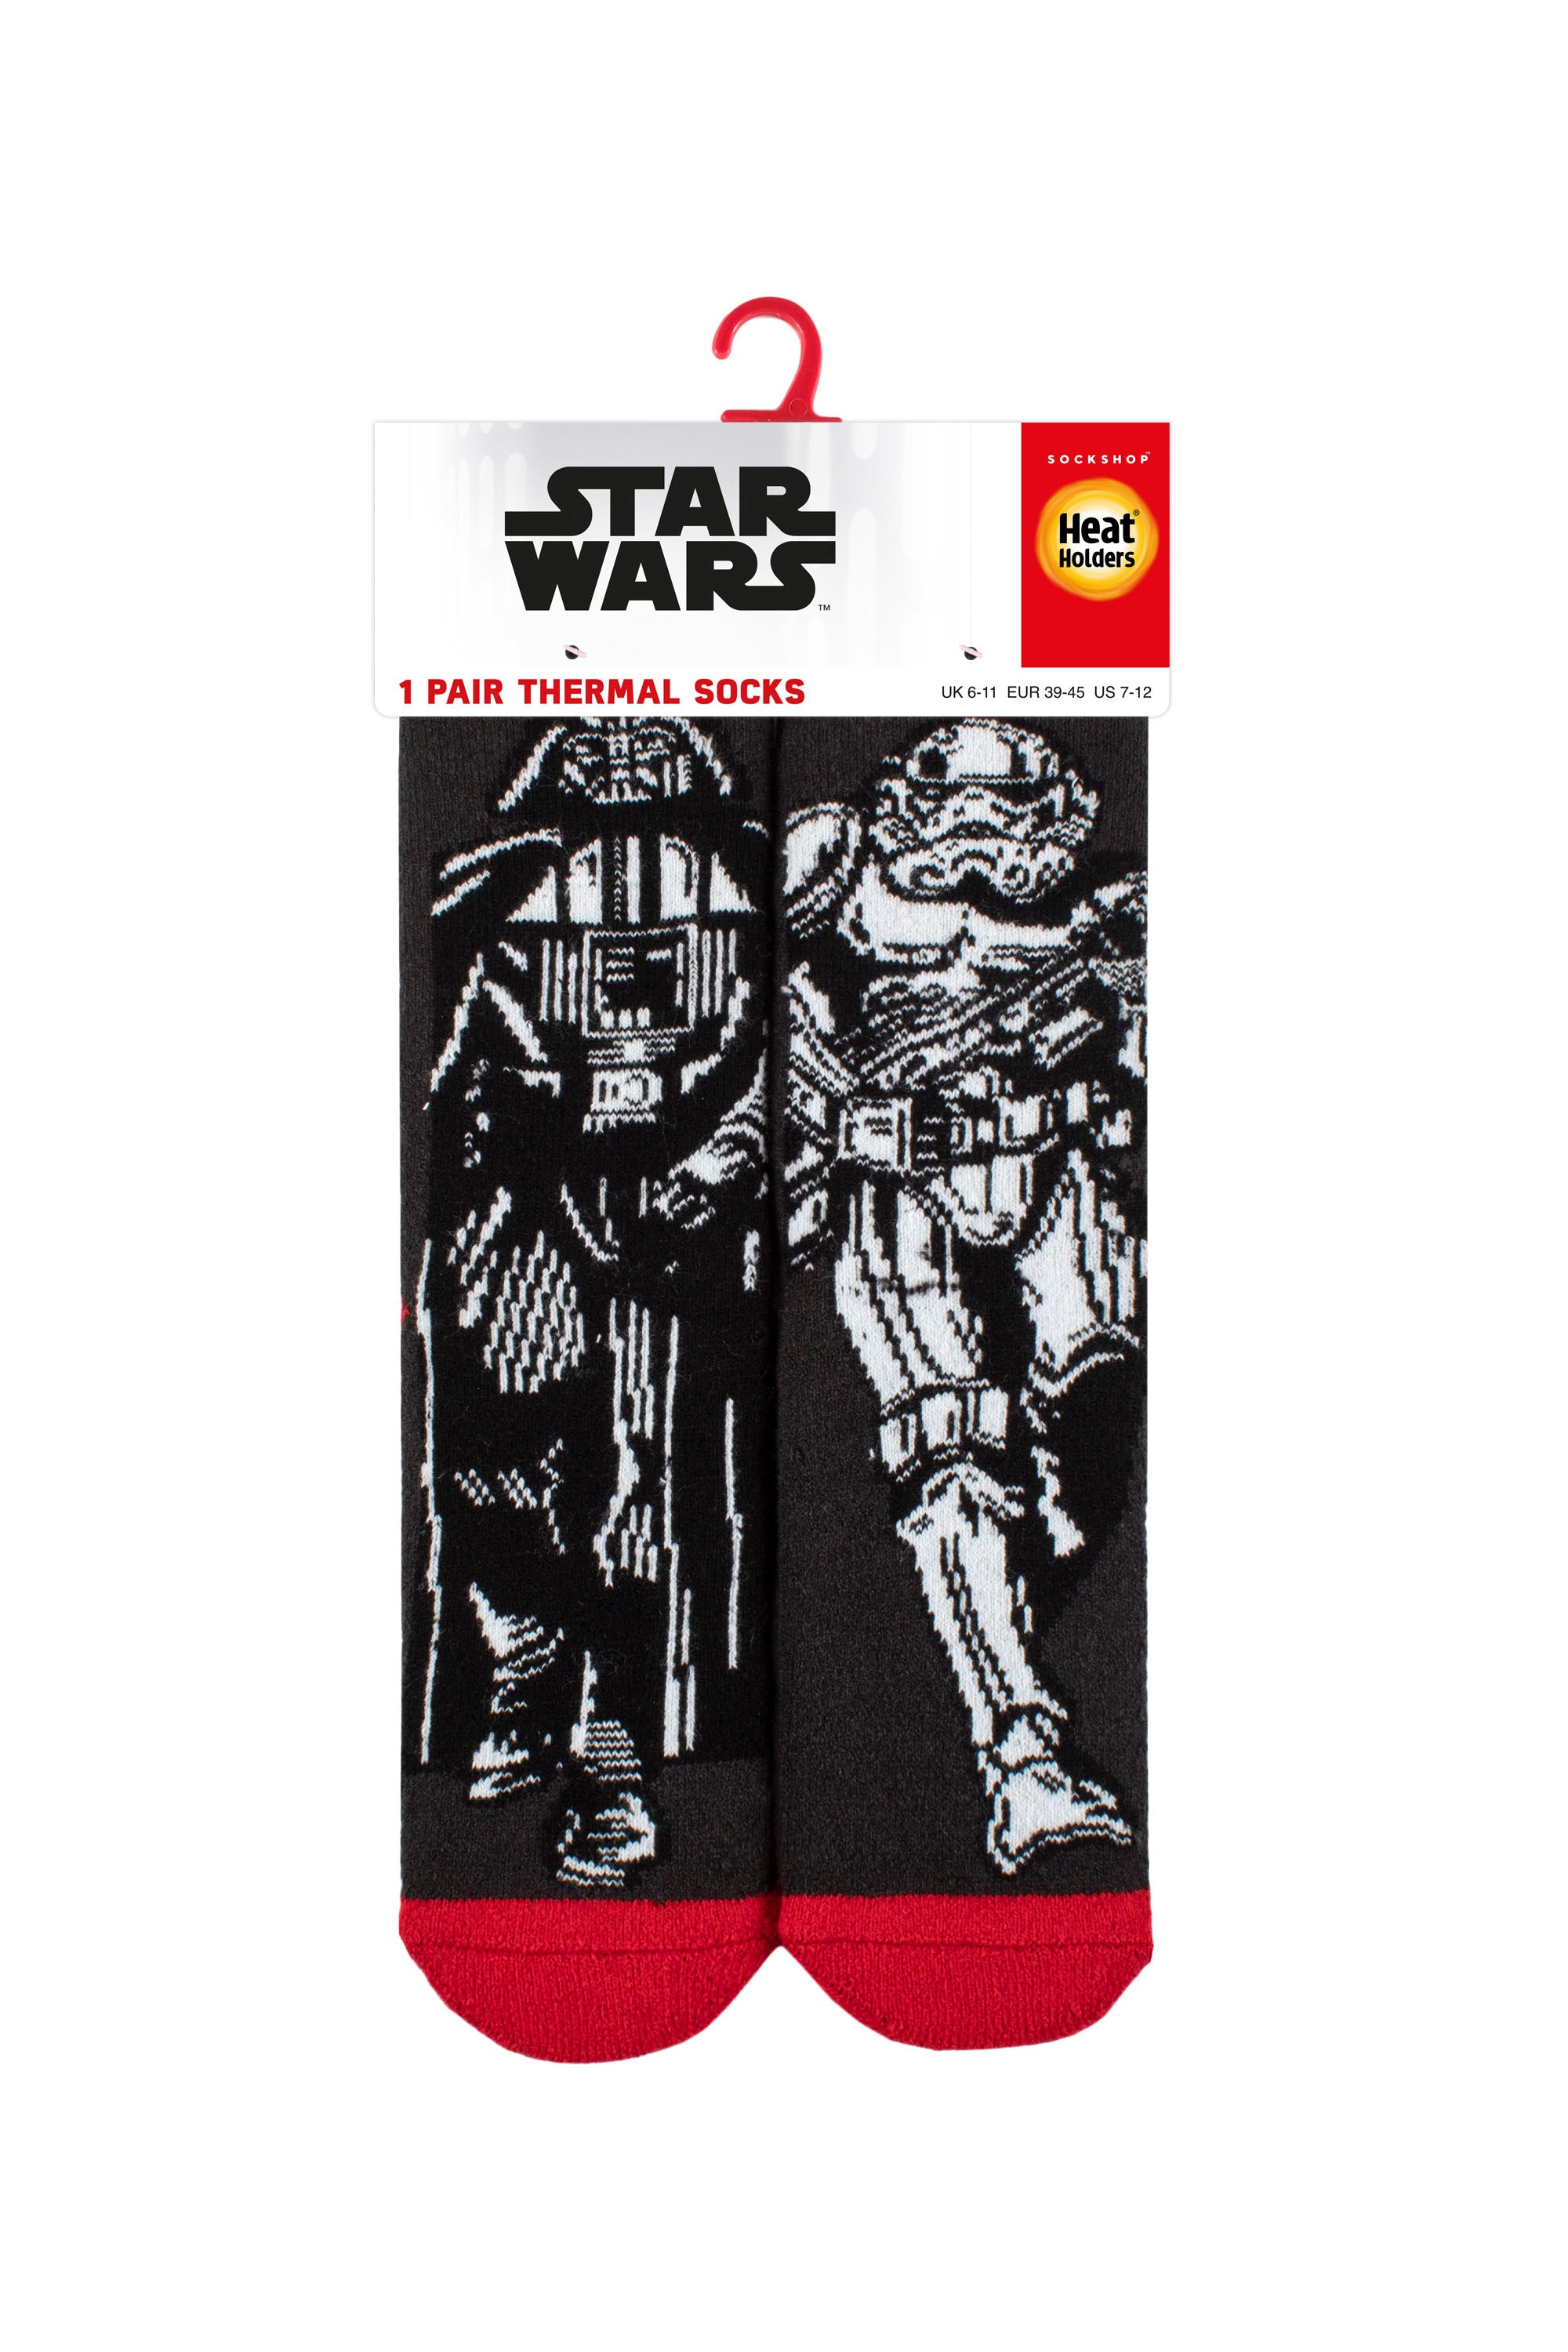 HEAT HOLDERS Lite Licensed Star War Character Socks-Darth Vader and Stormtrooper-Mens 6/11